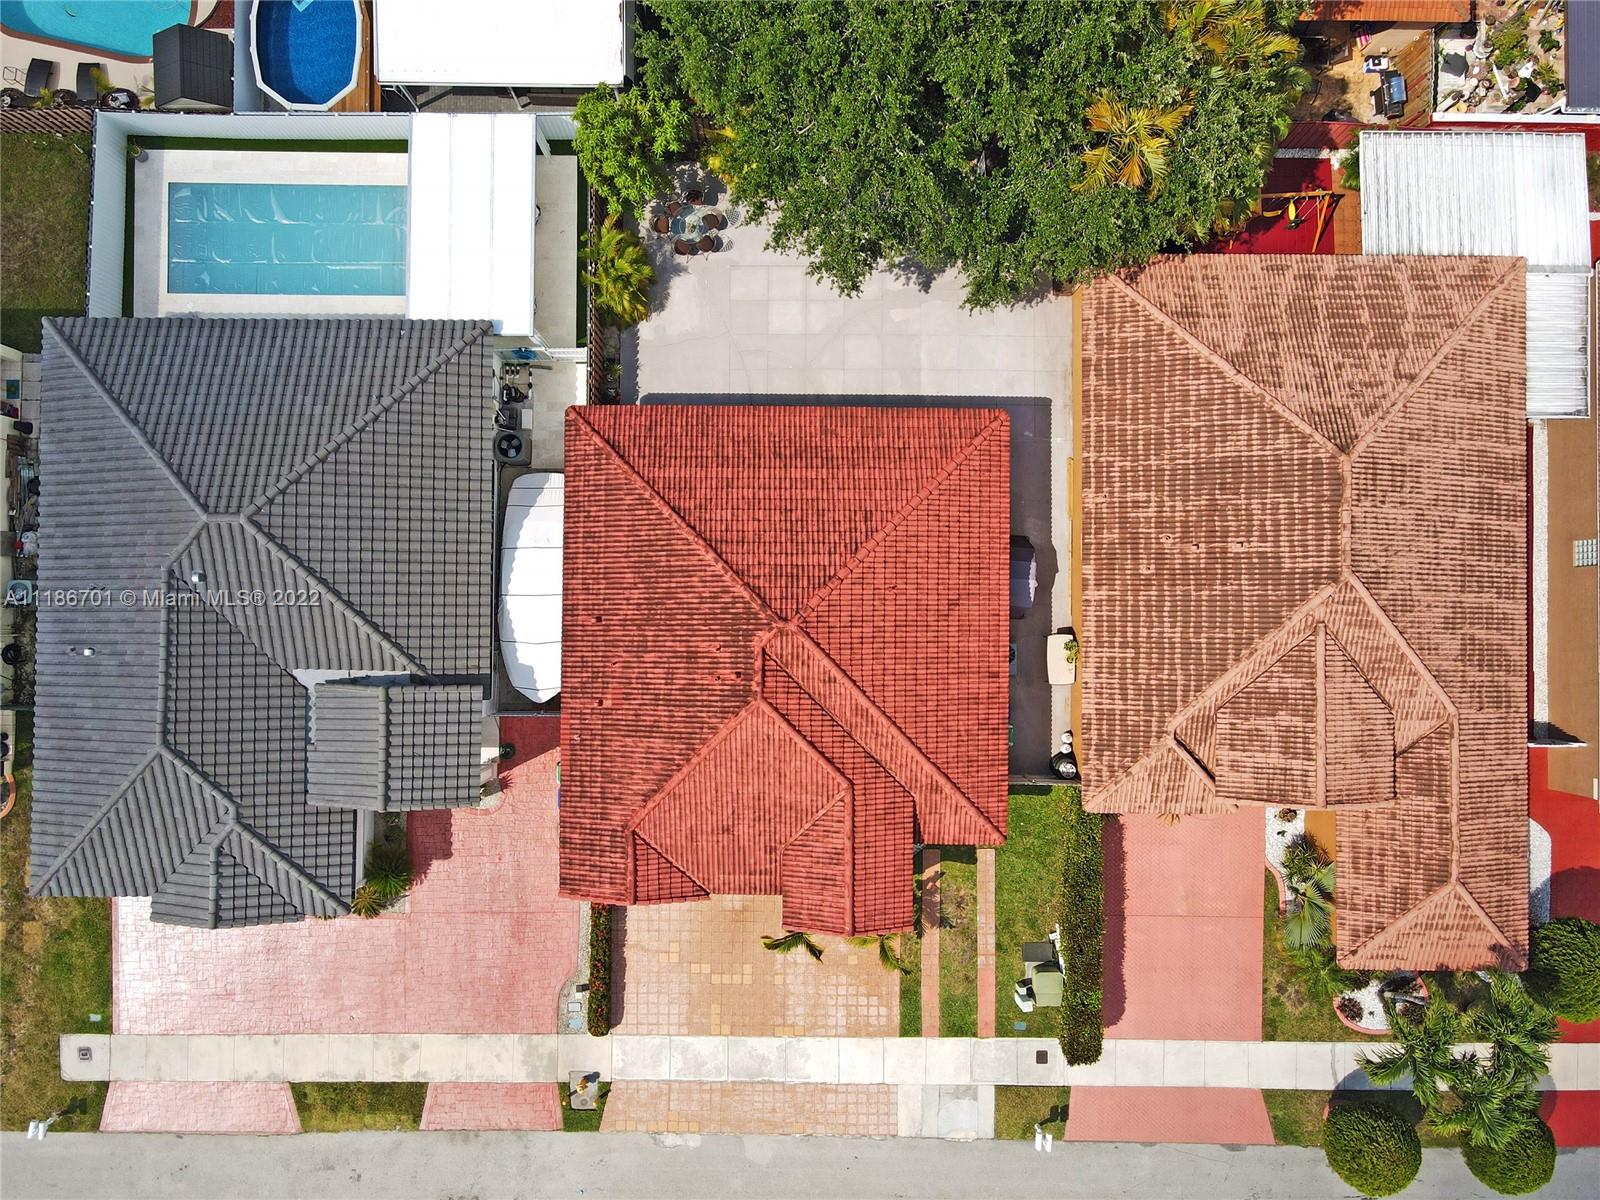 Birds eye view of house showing neighbors properties